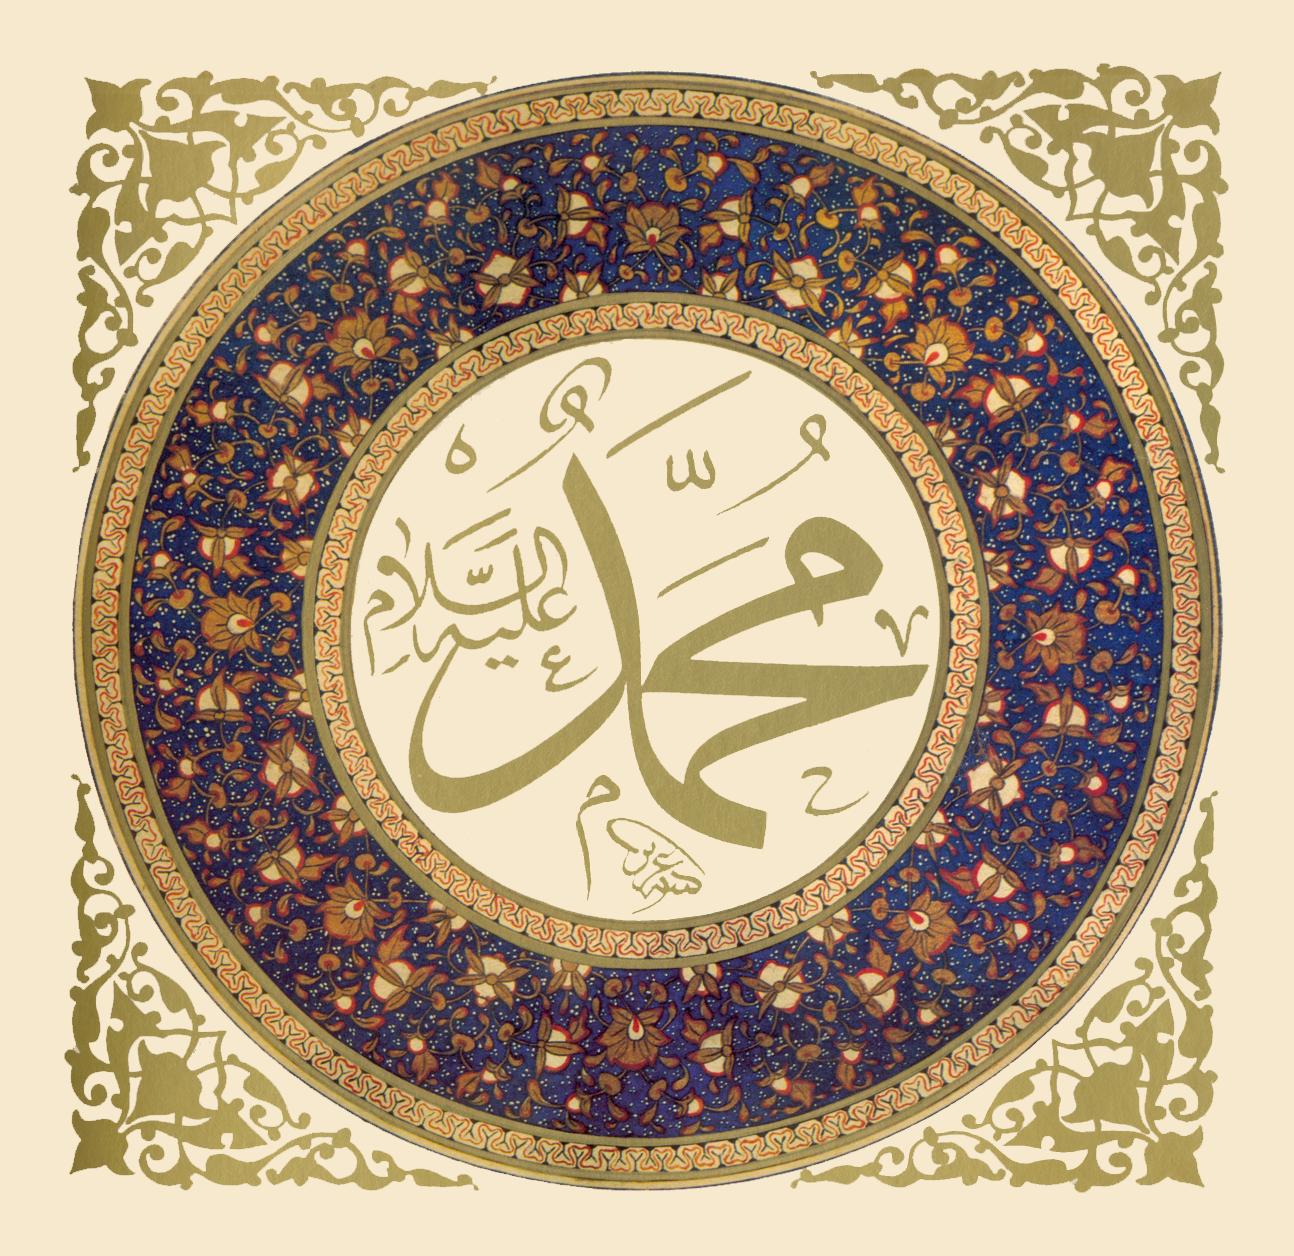 Muhammad prophet of islam maxime rodinson pdf